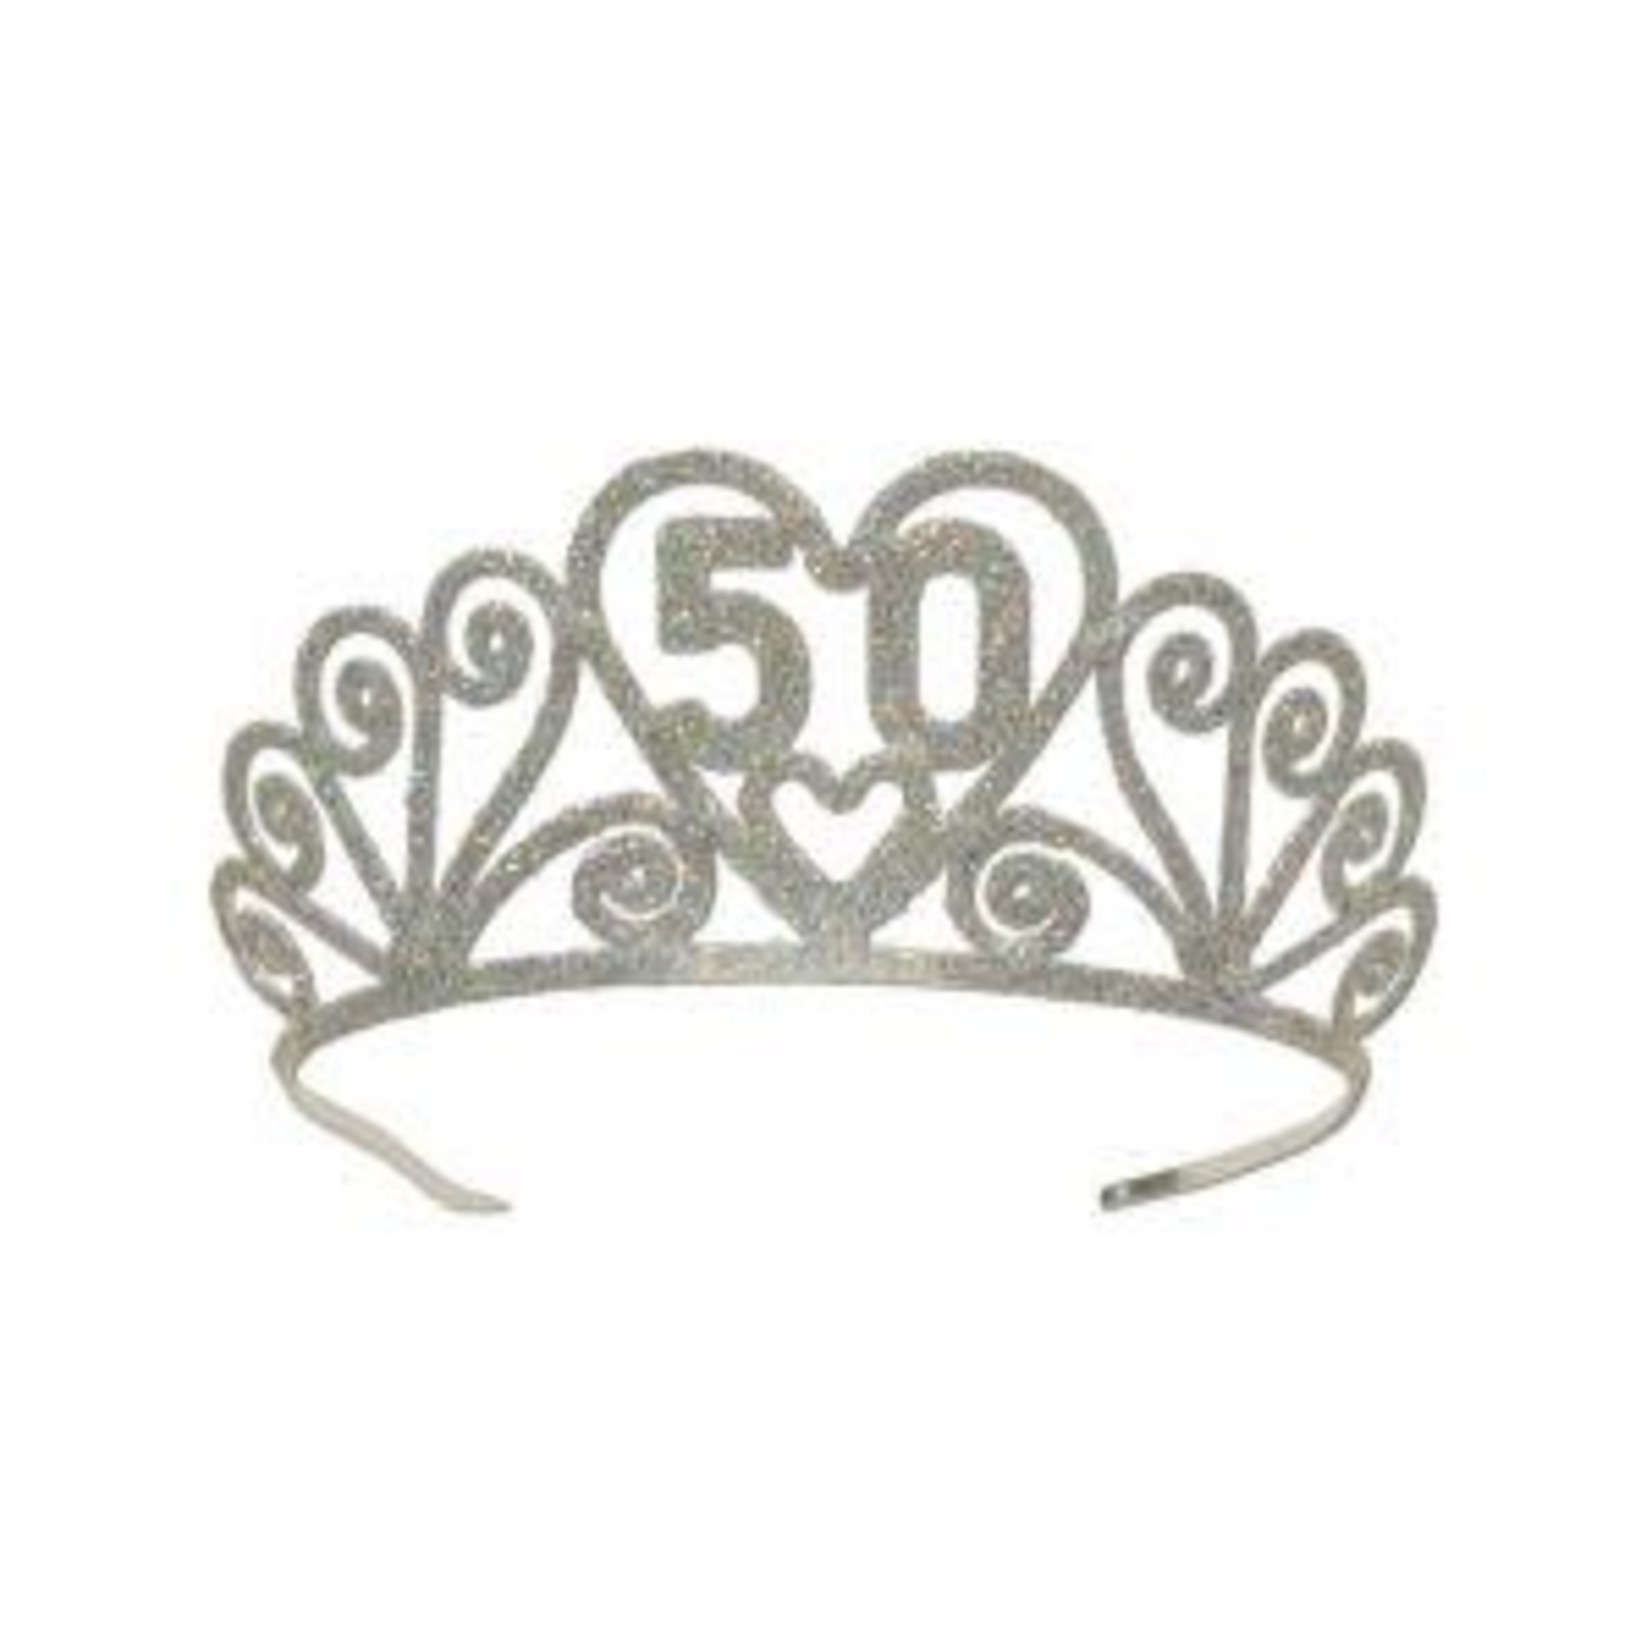 Beistle 50th Birthday Silver Glittered Tiara - 1ct.